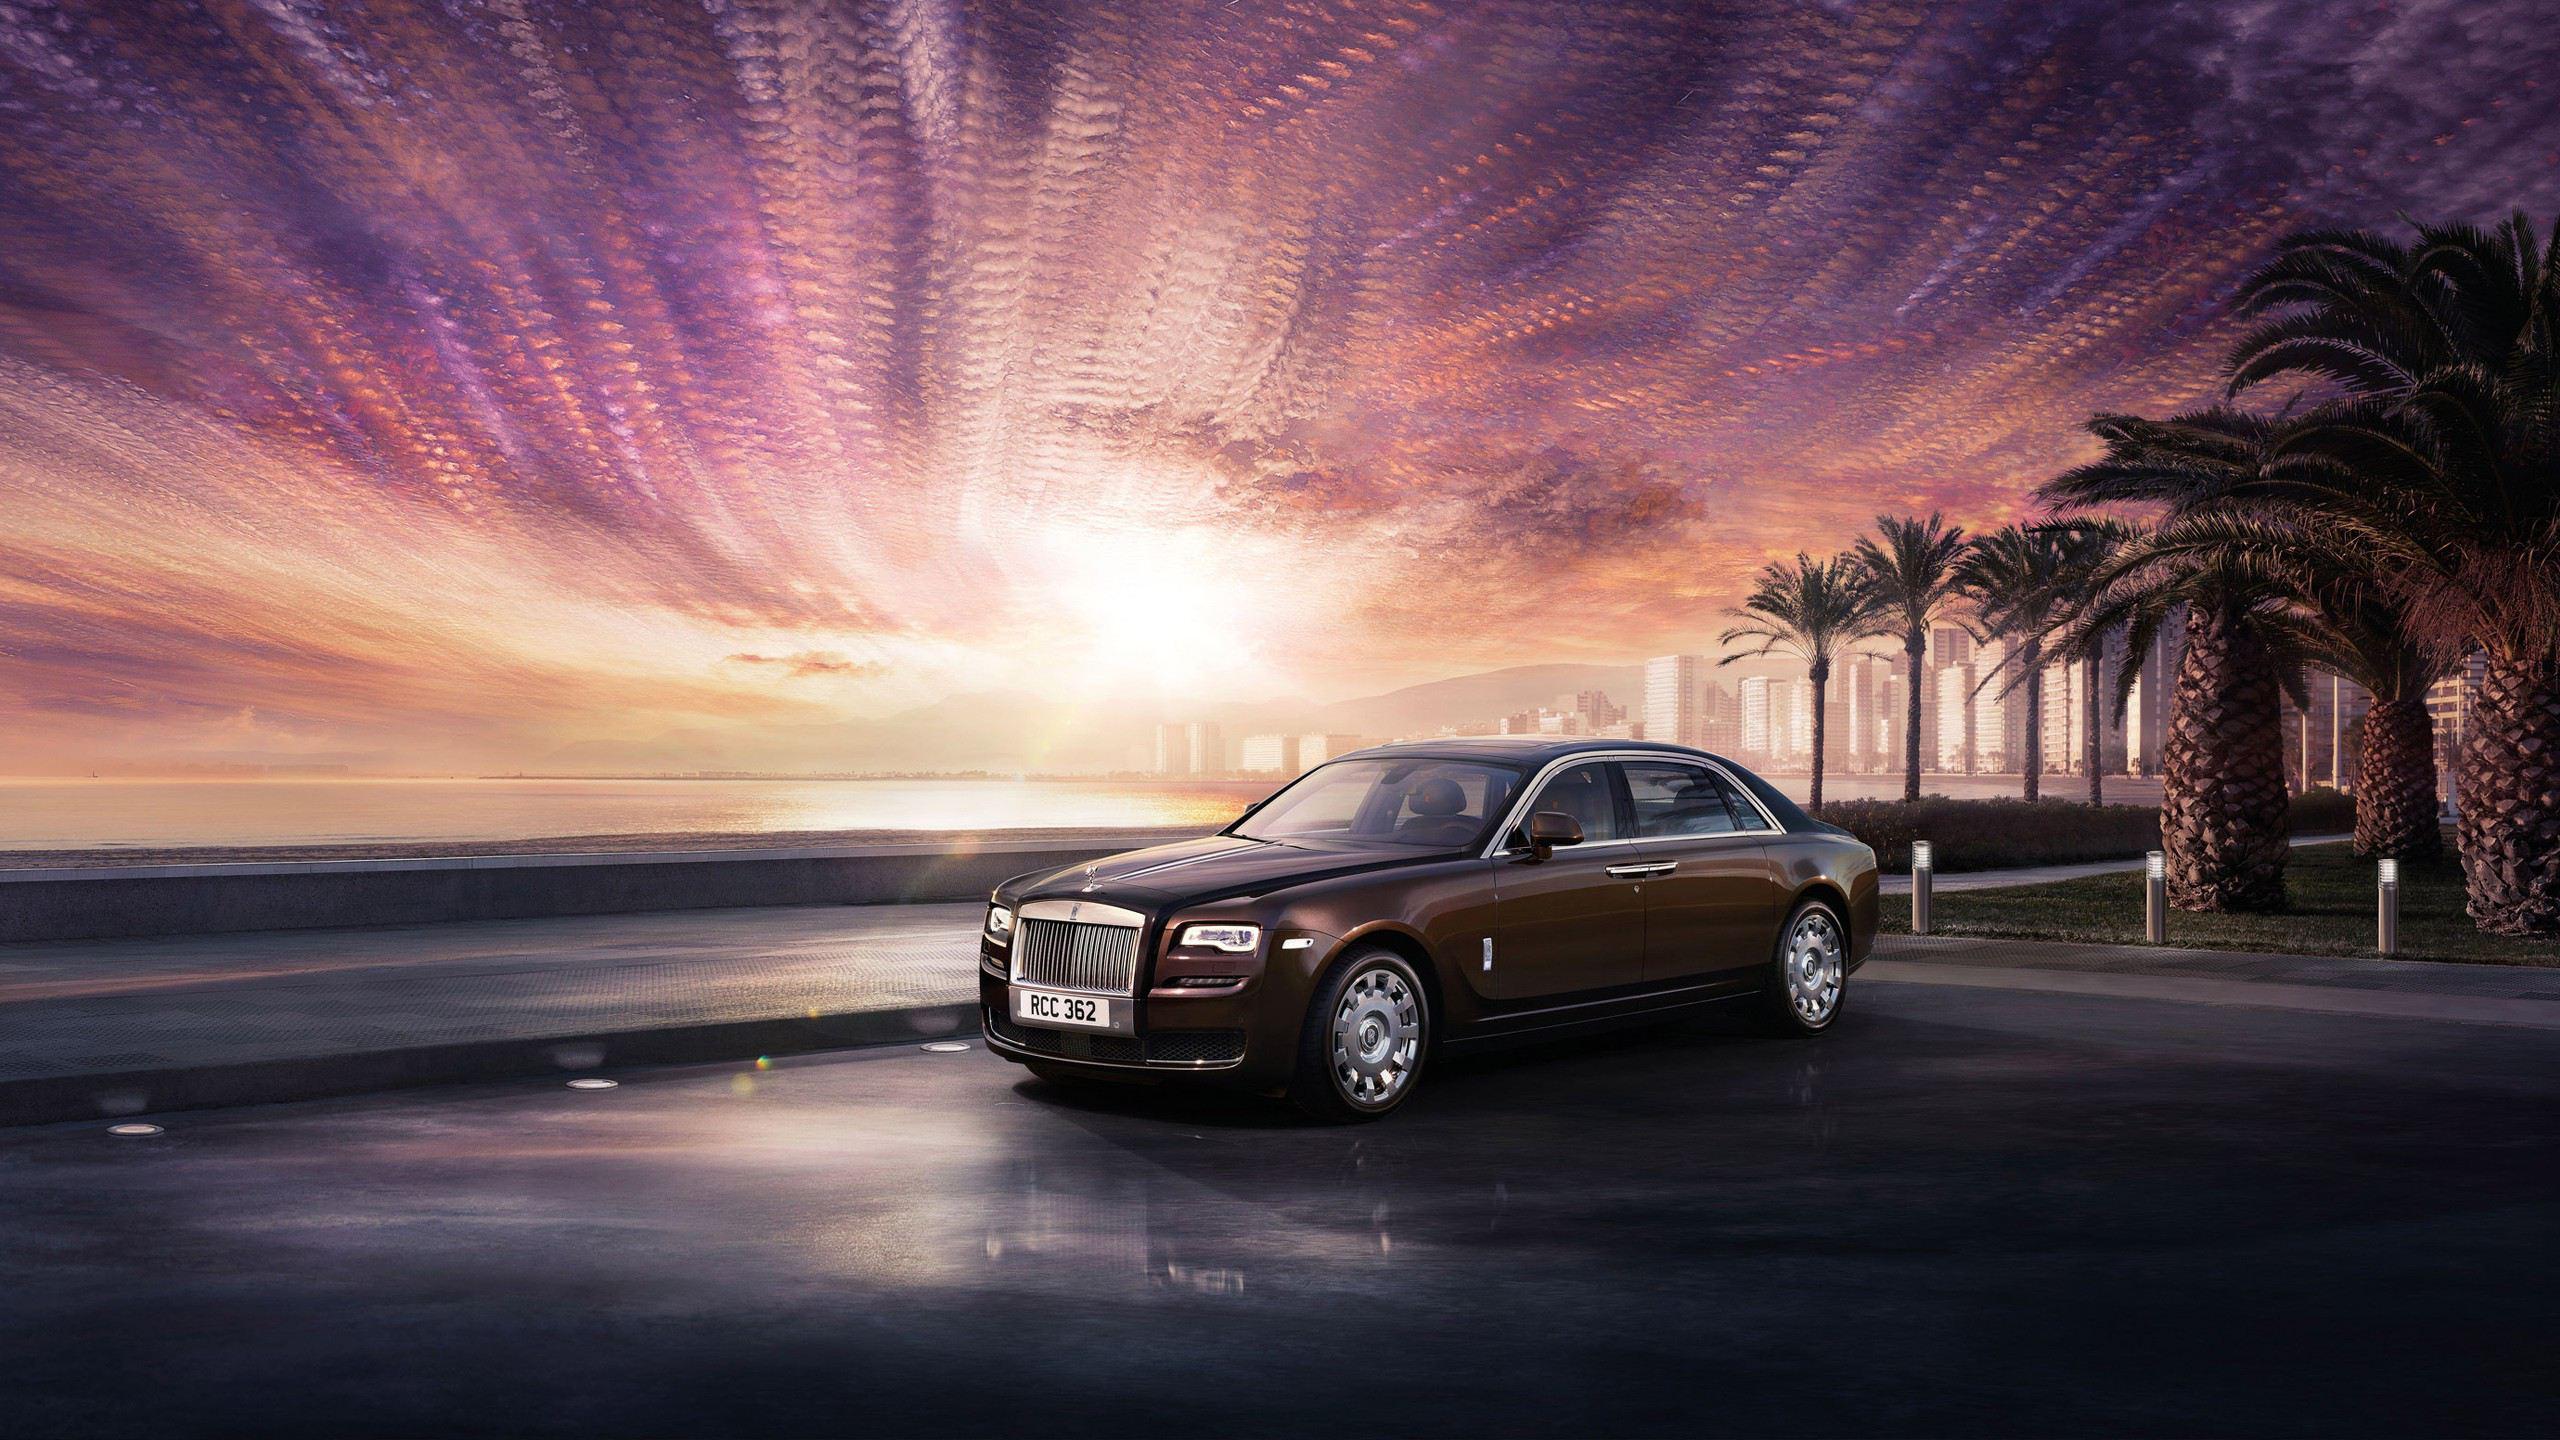 Rolls Royce Cars HD Theme Wallpaper for Chrome